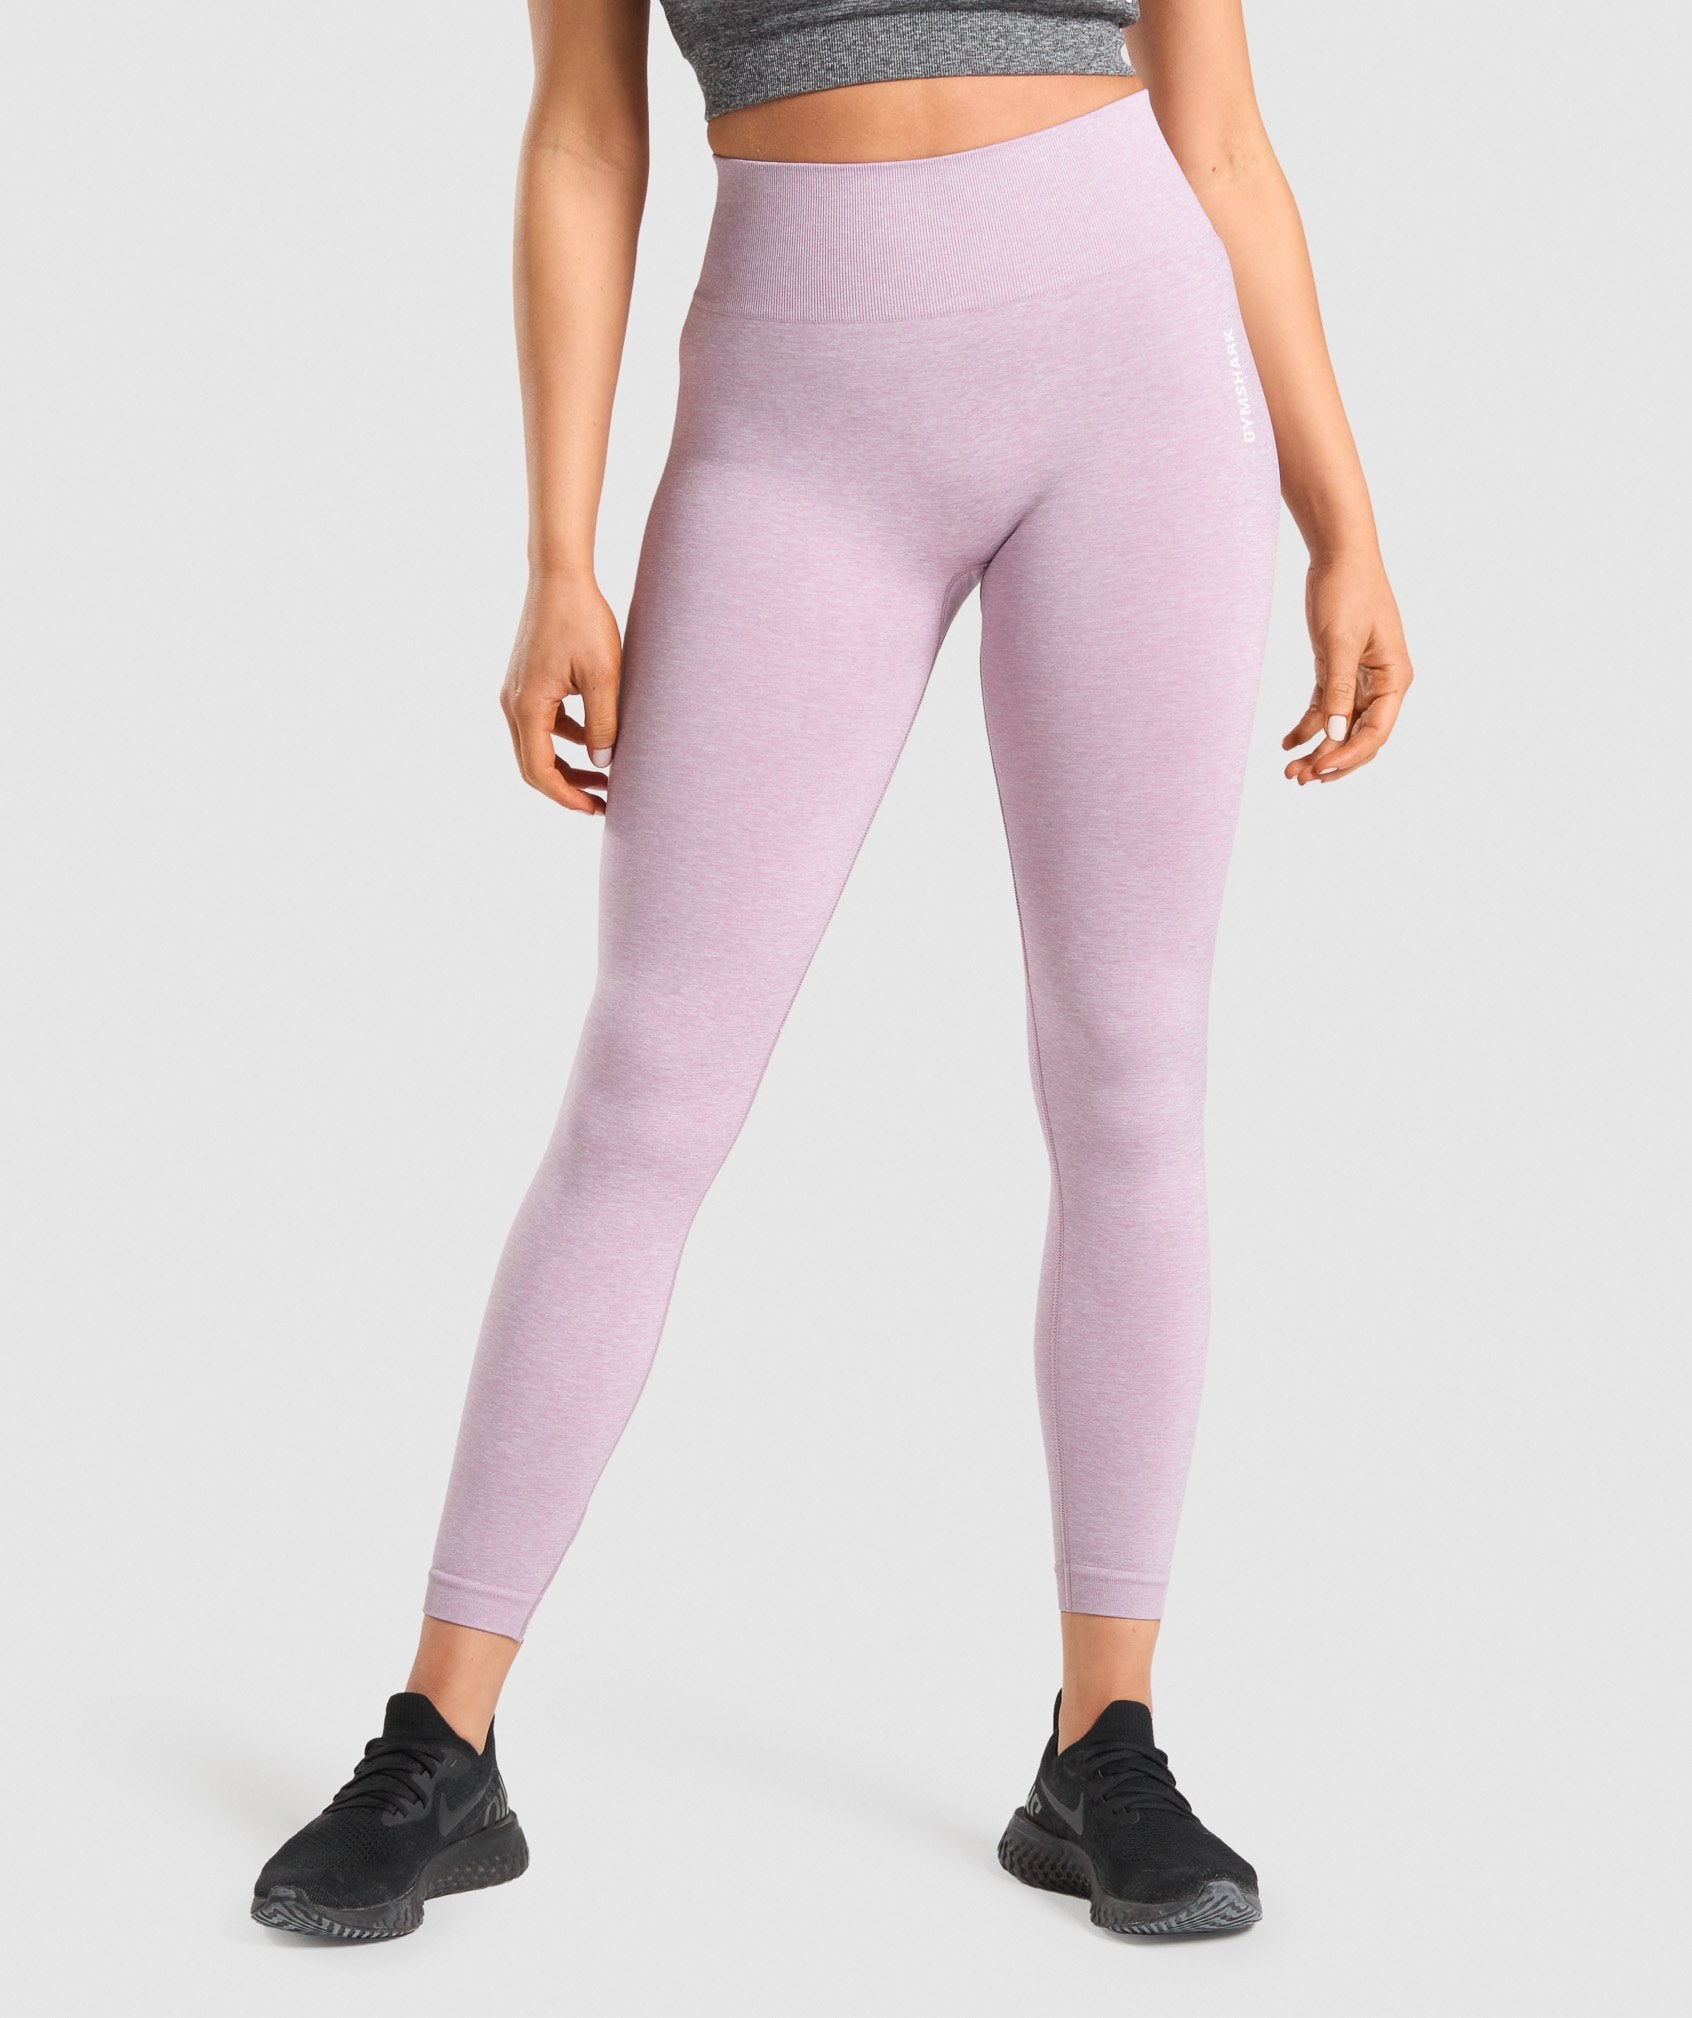 Gymshark lavender legging - Gem